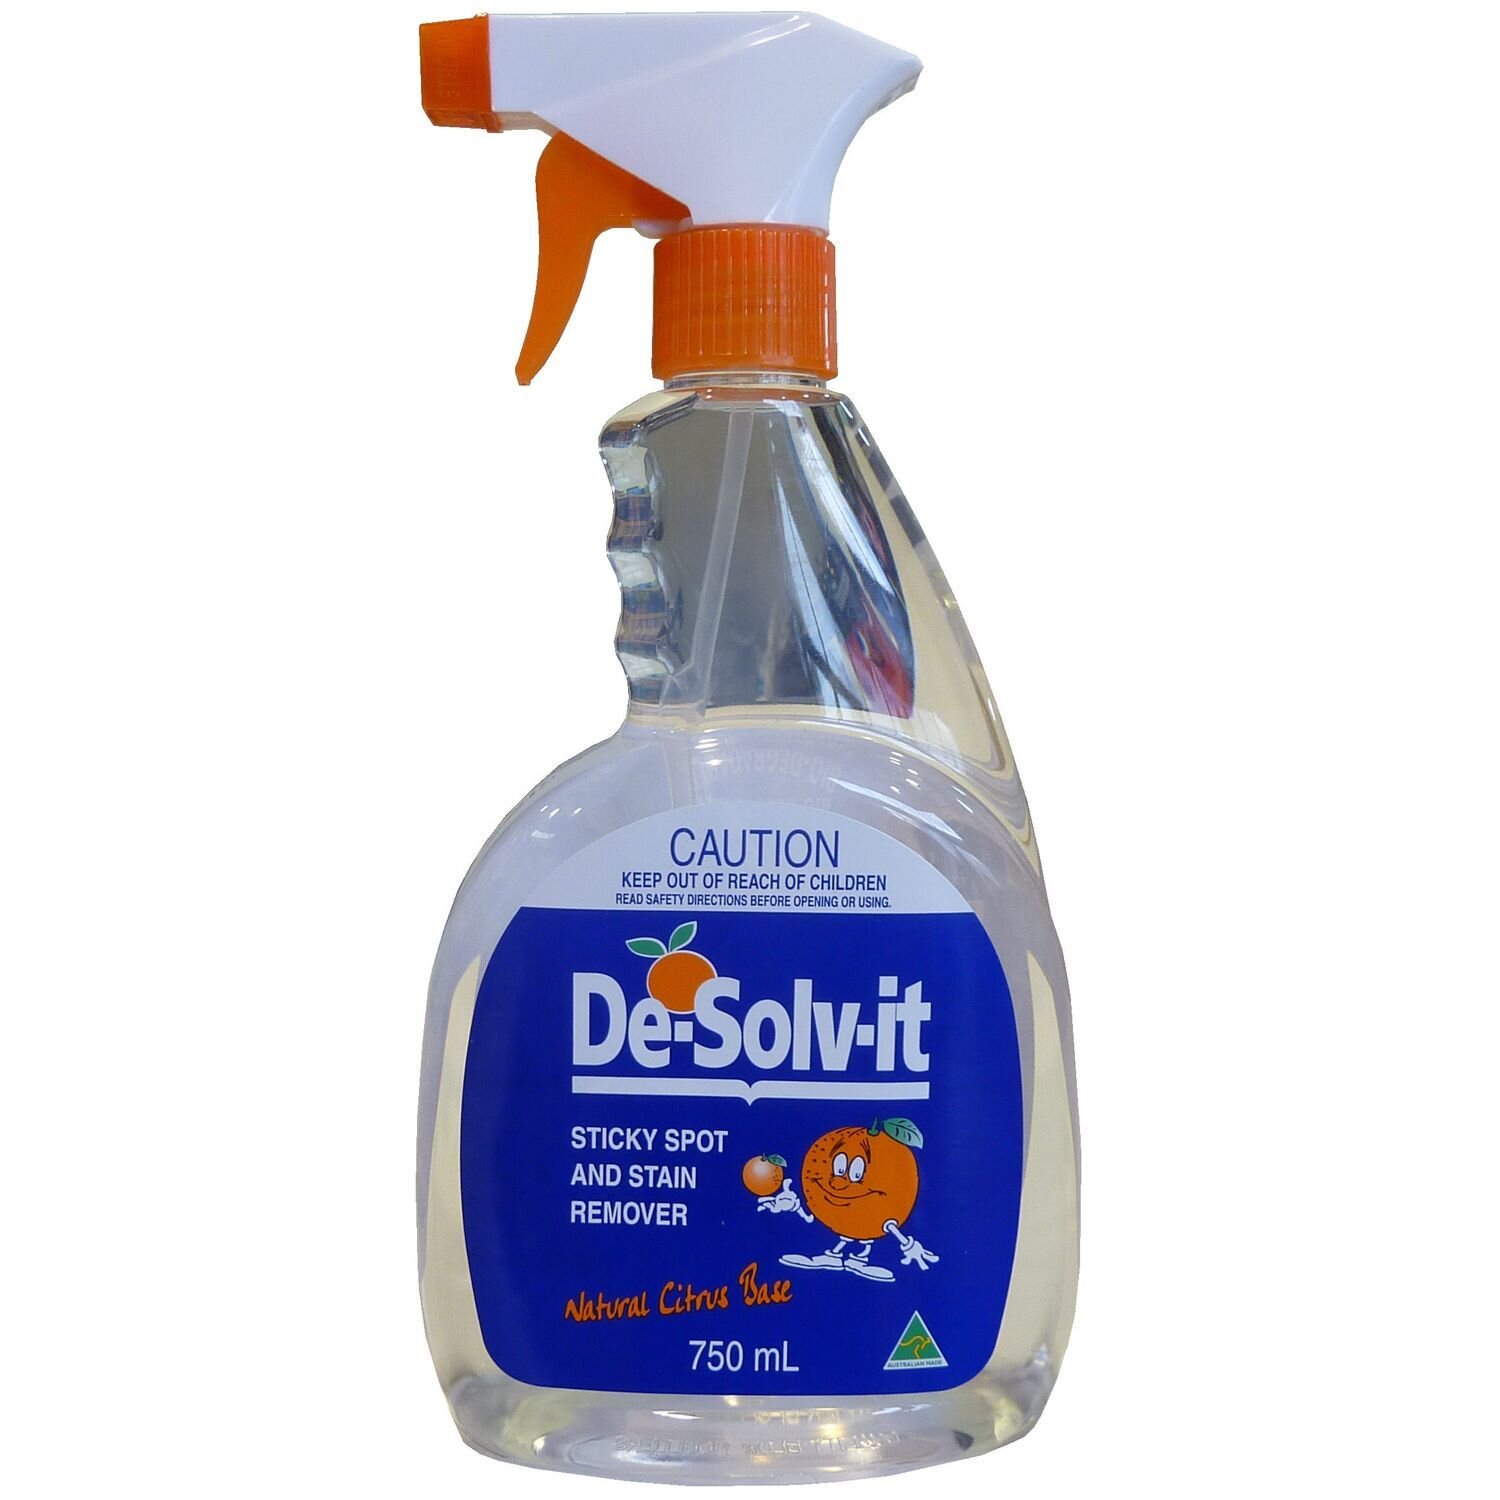 De-Solv-It Solvent Cleaner